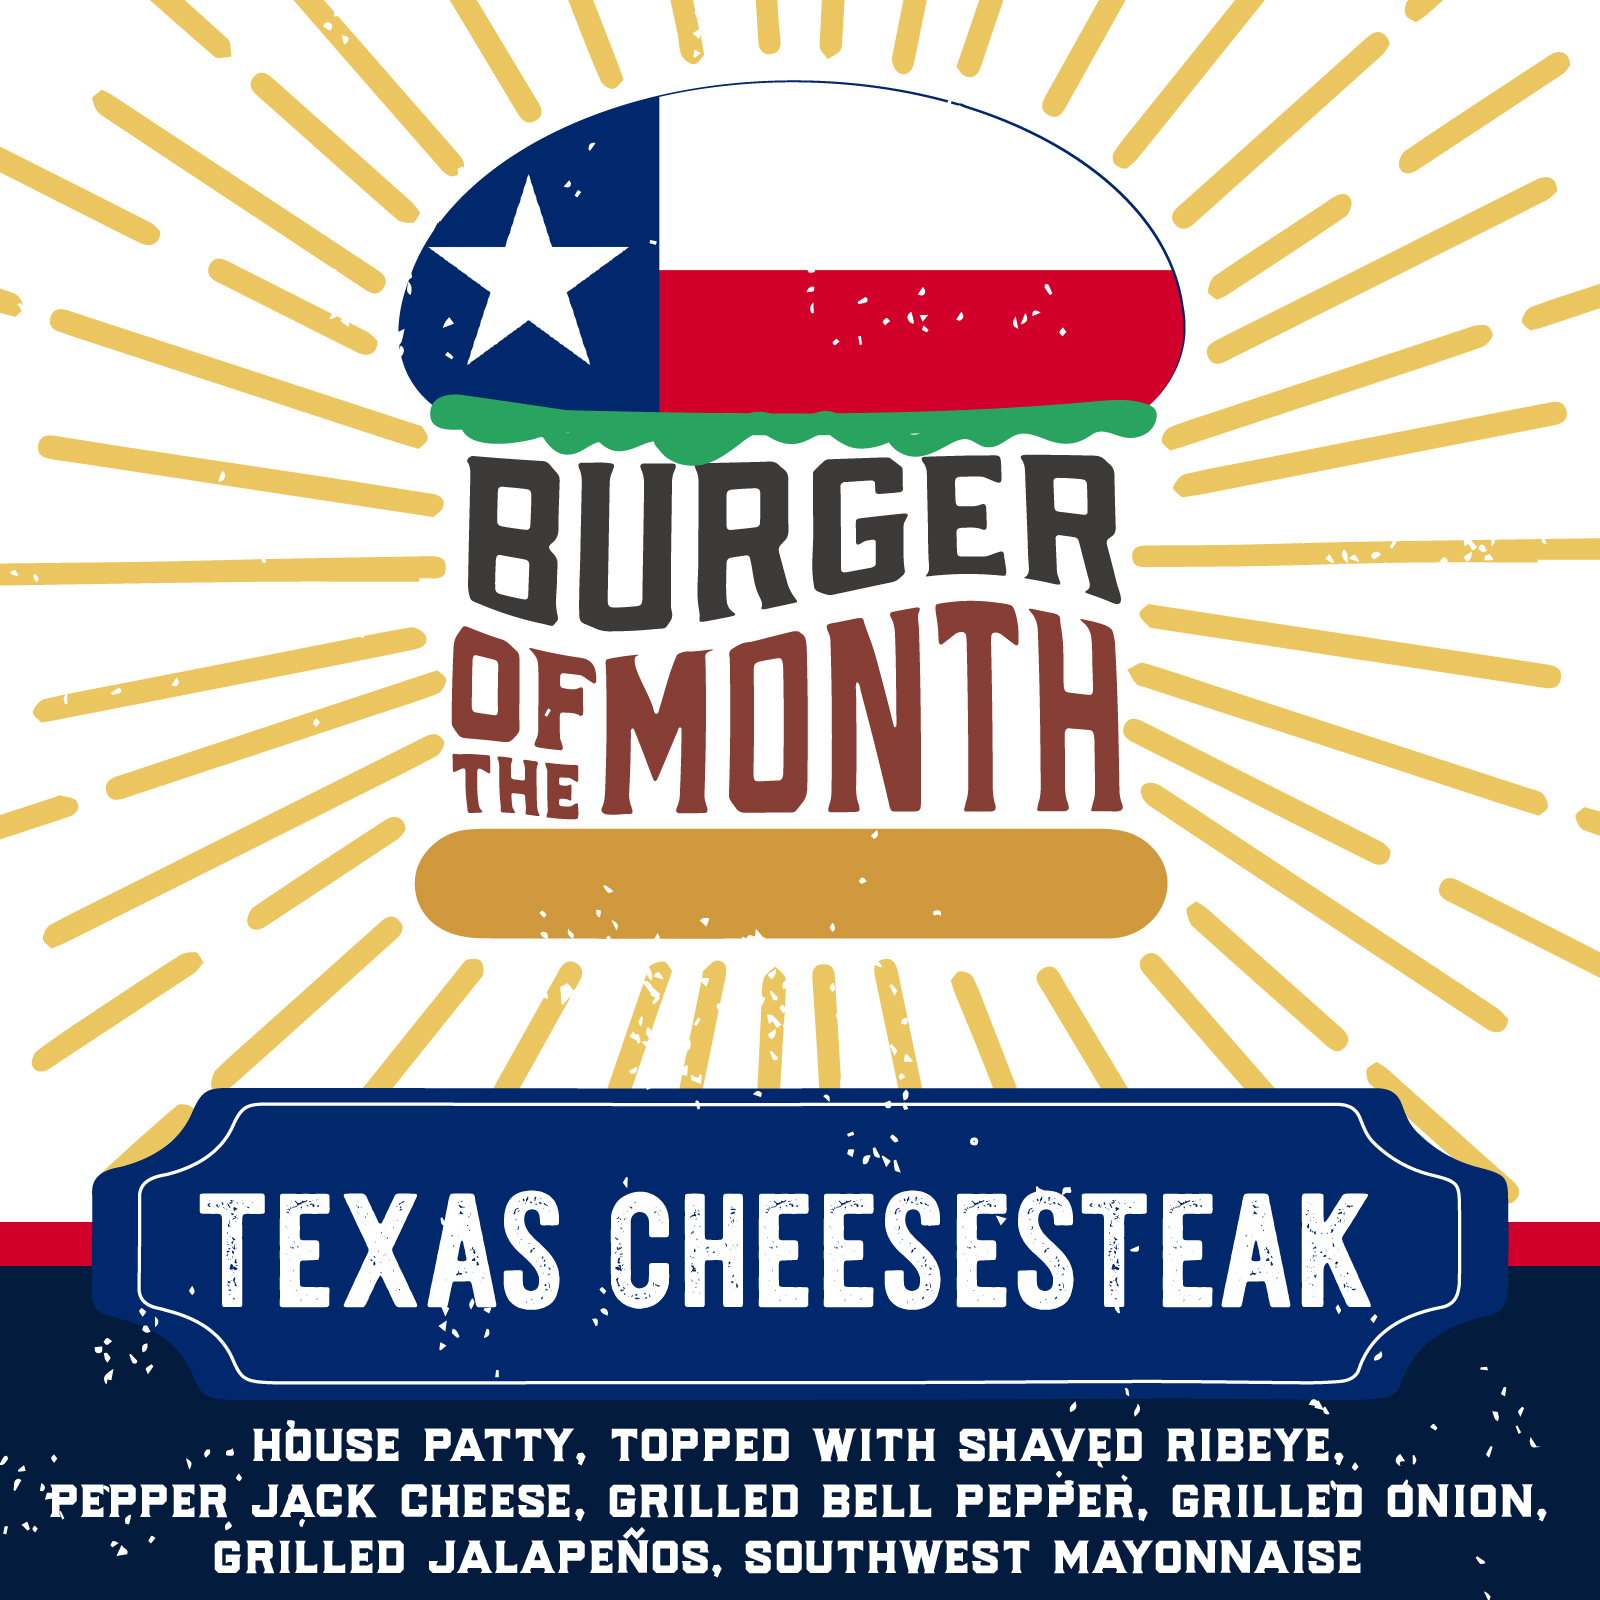 Texas Cheesesteak Burger